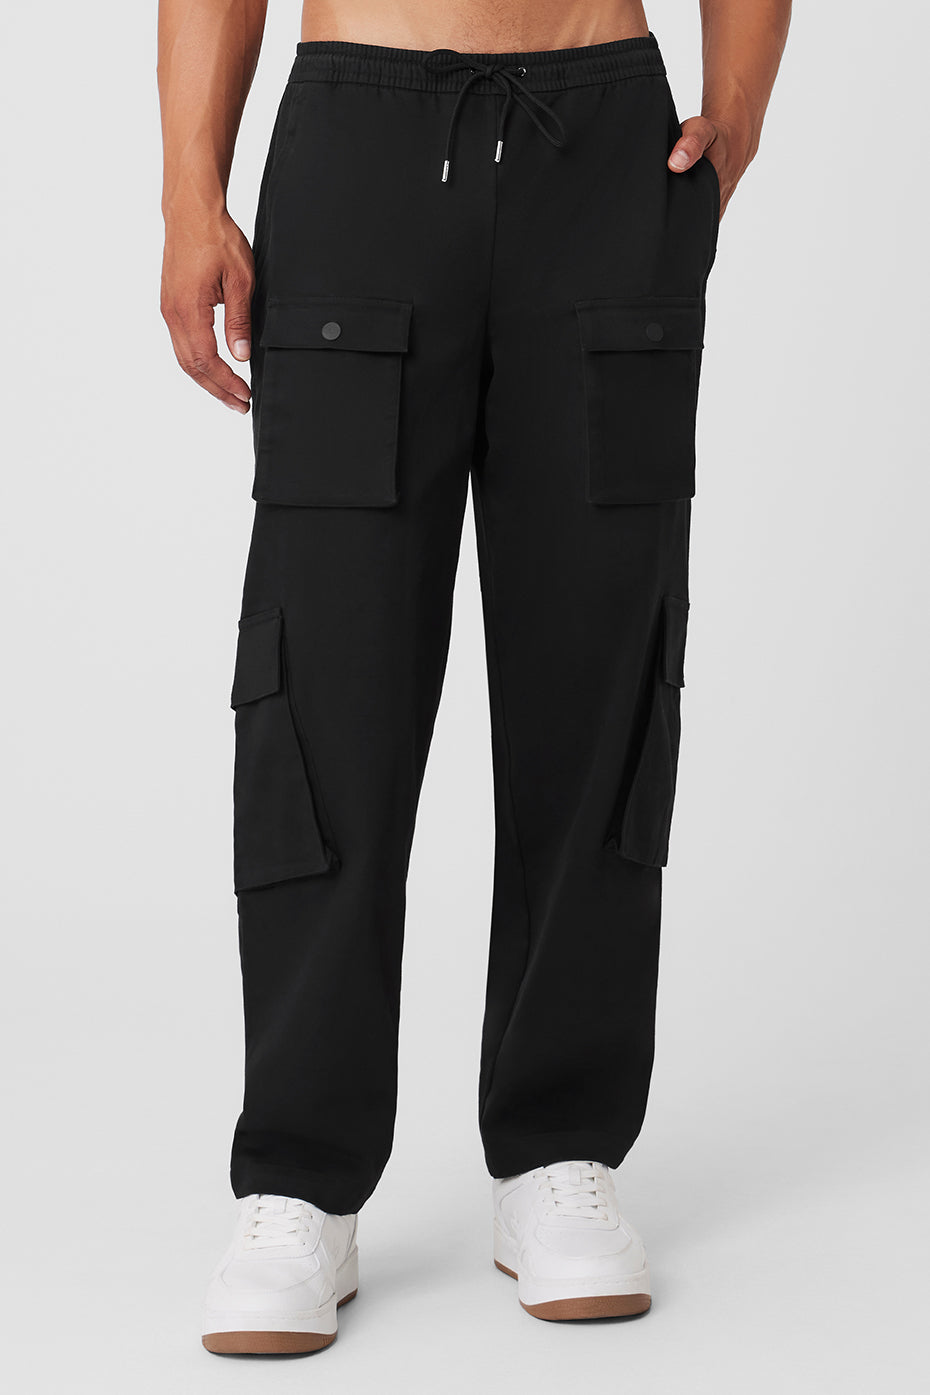 Cuffed Renown Heavy Weight Sweatpant - Black